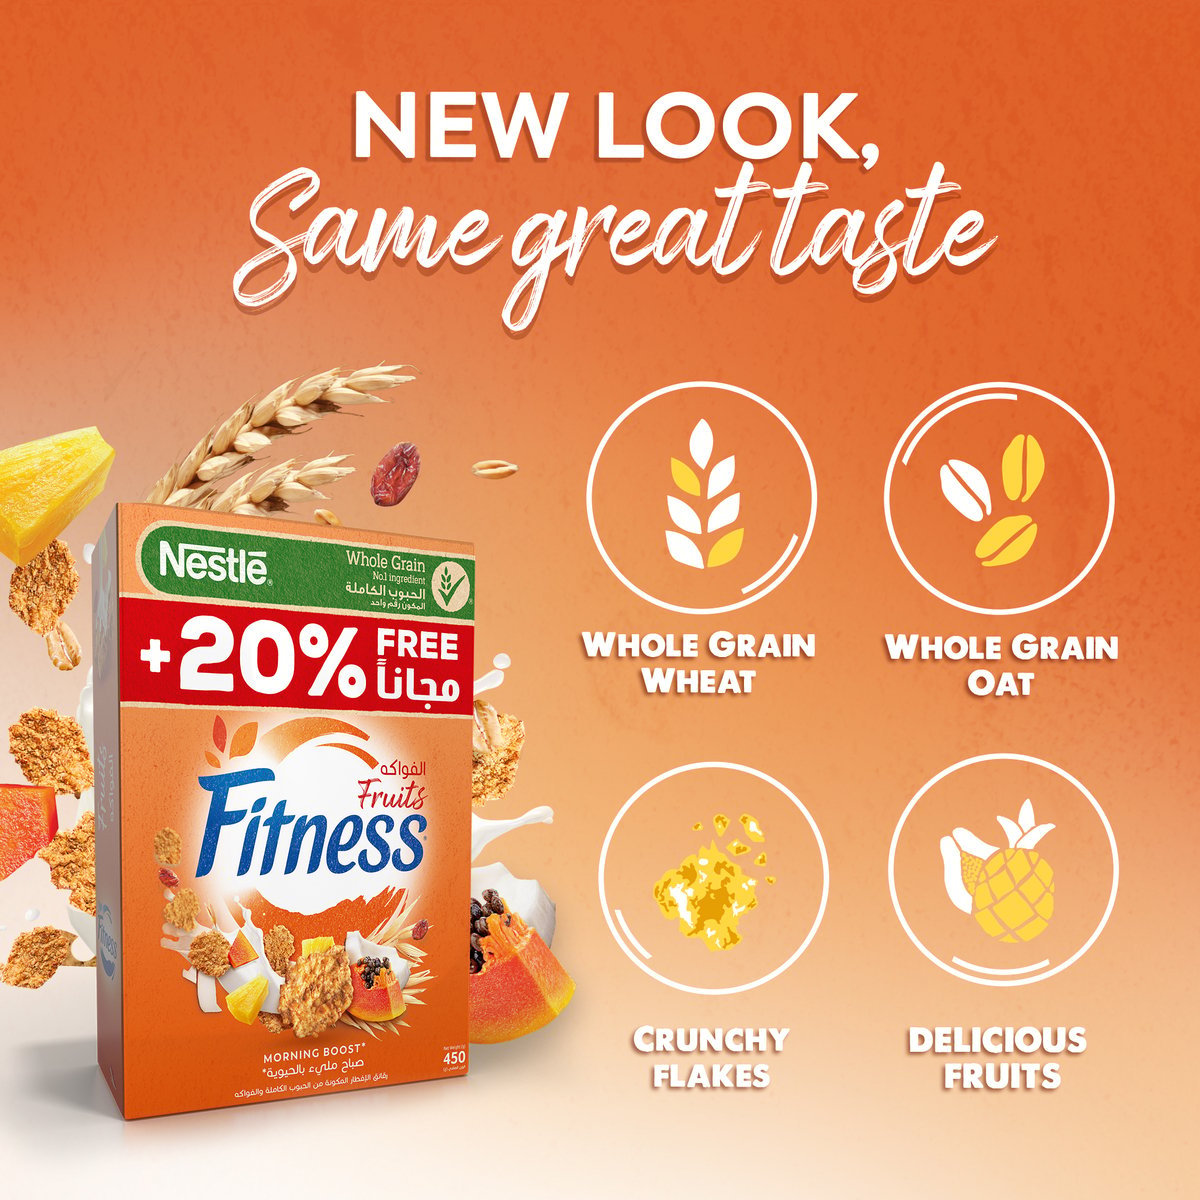 Nestle Fitness Fruits Breakfast Cereal 450 g